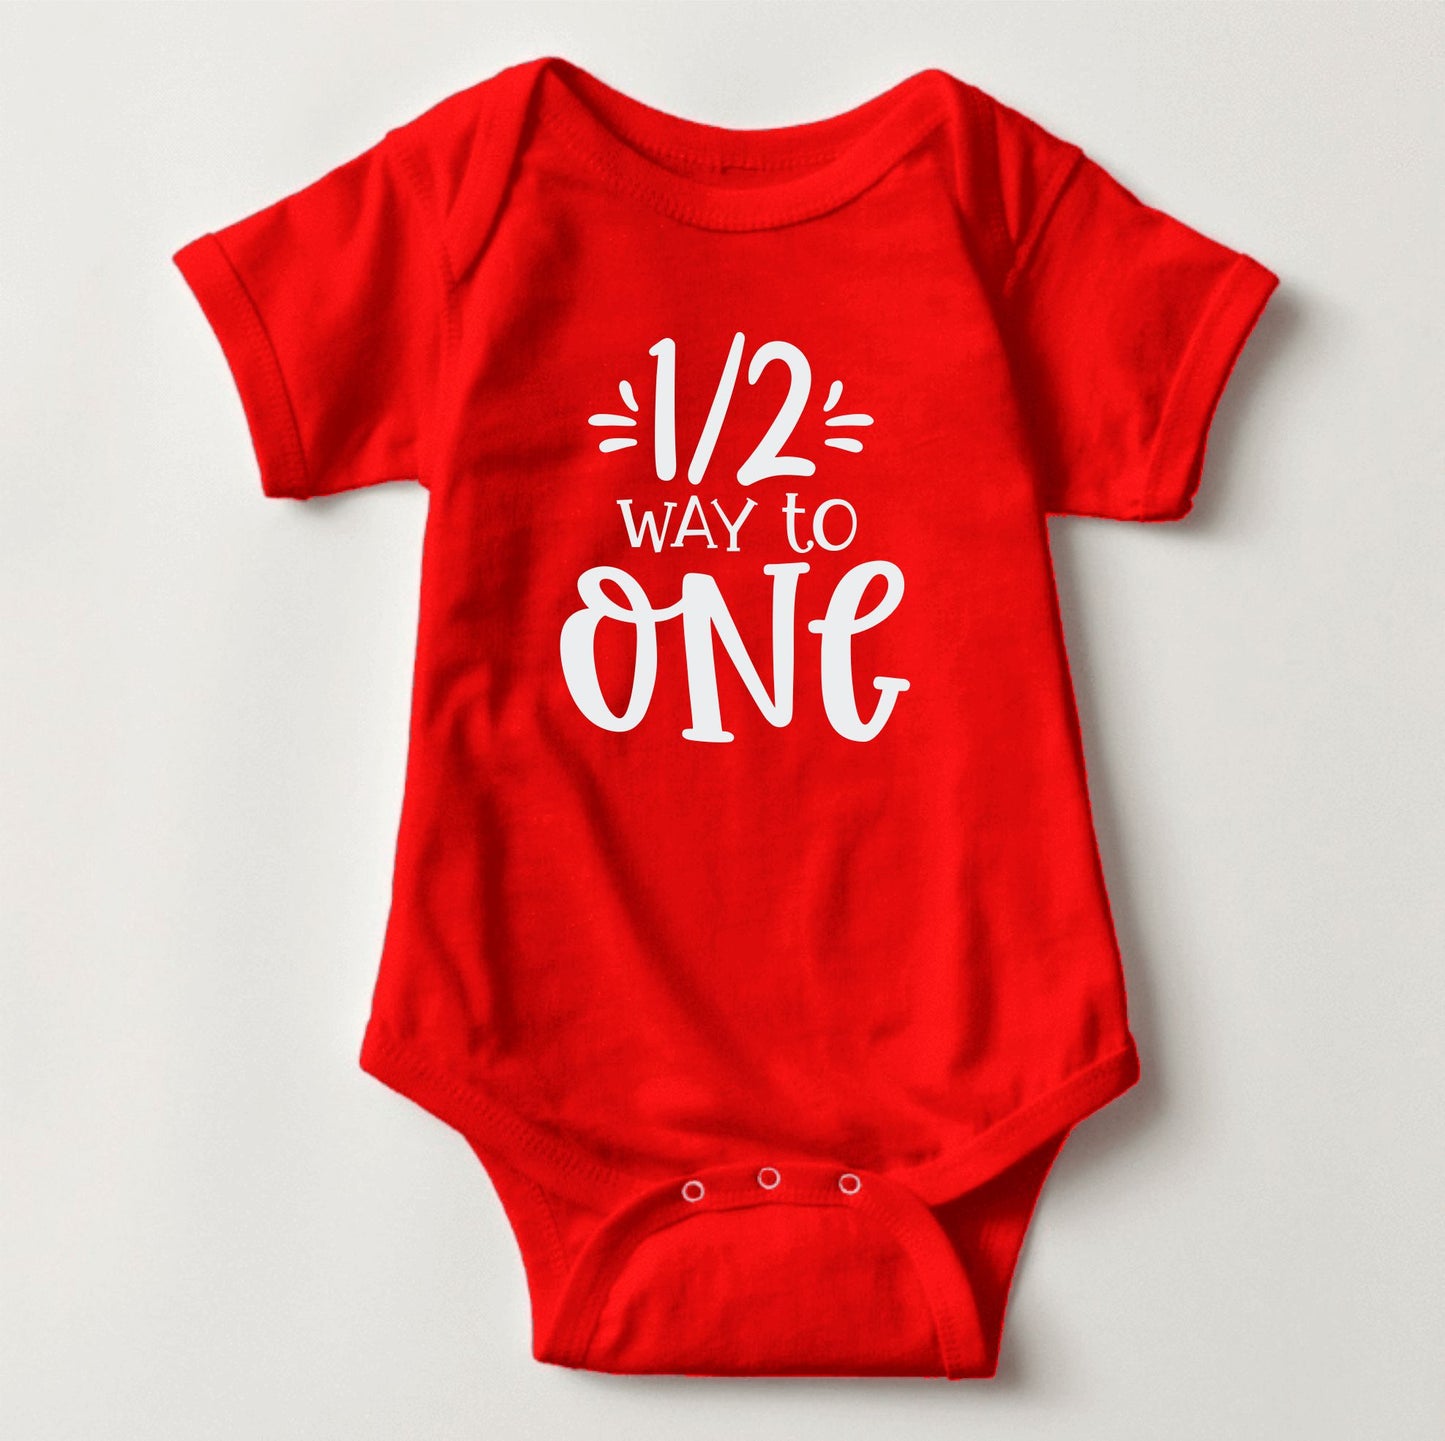 Baby 1/2 Birthday Onesies - 1/2 Way to ONE - MYSTYLEMYCLOTHING